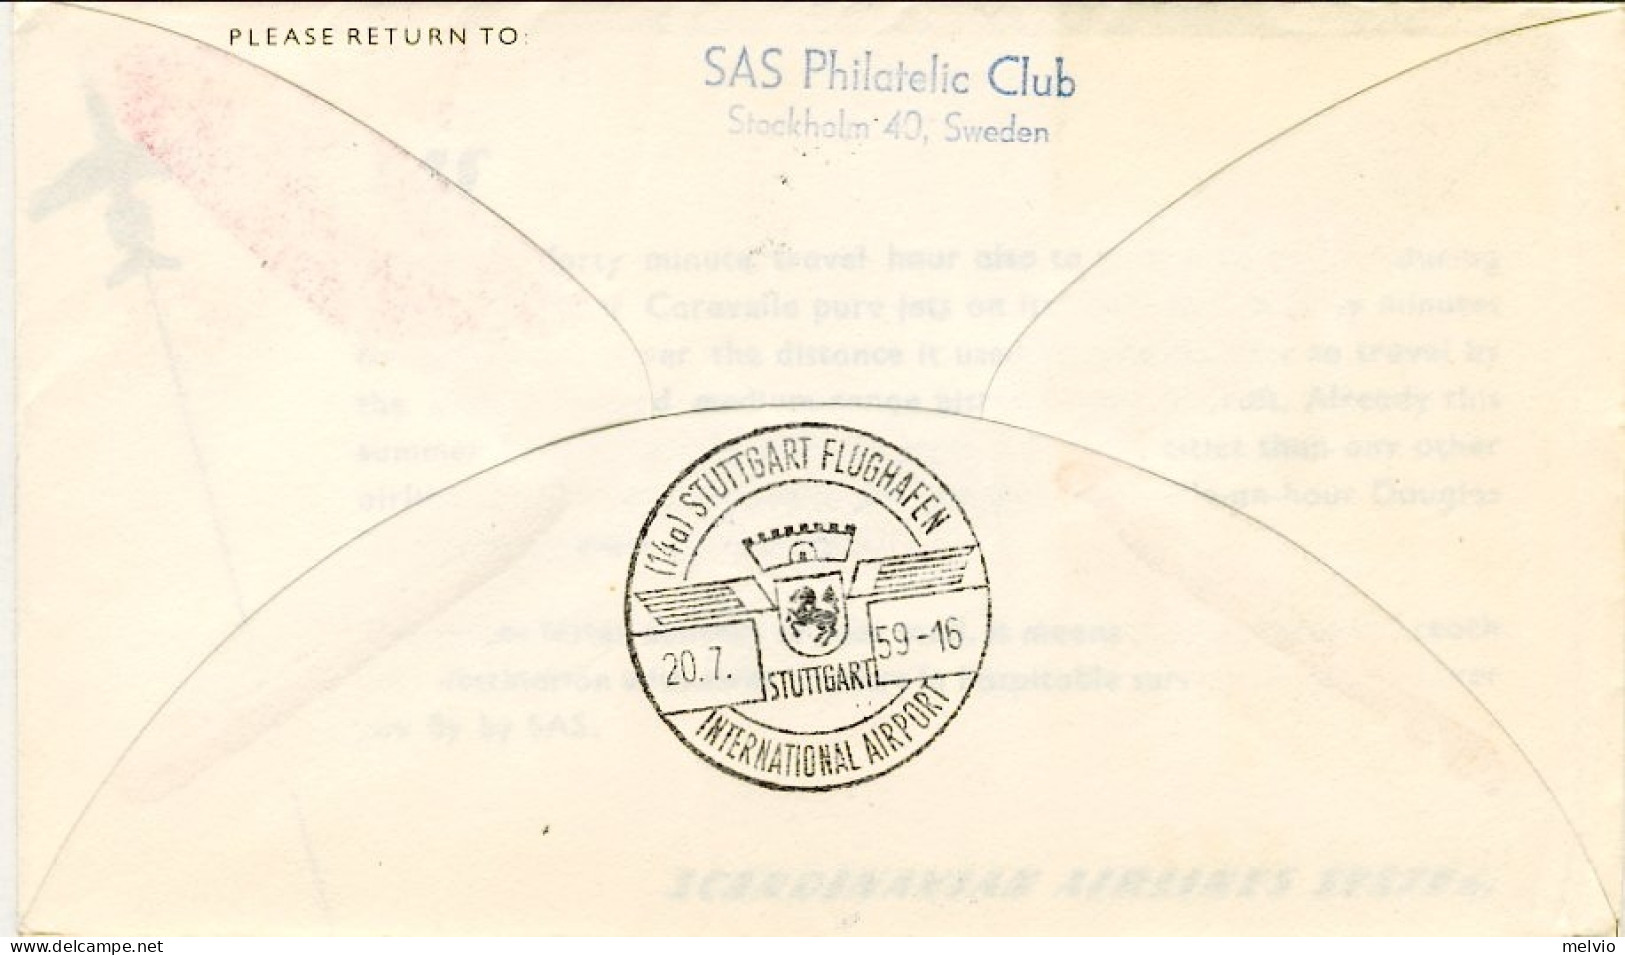 1959-Svezia I^volo SAS Stoccolma Stoccarda - Lettres & Documents